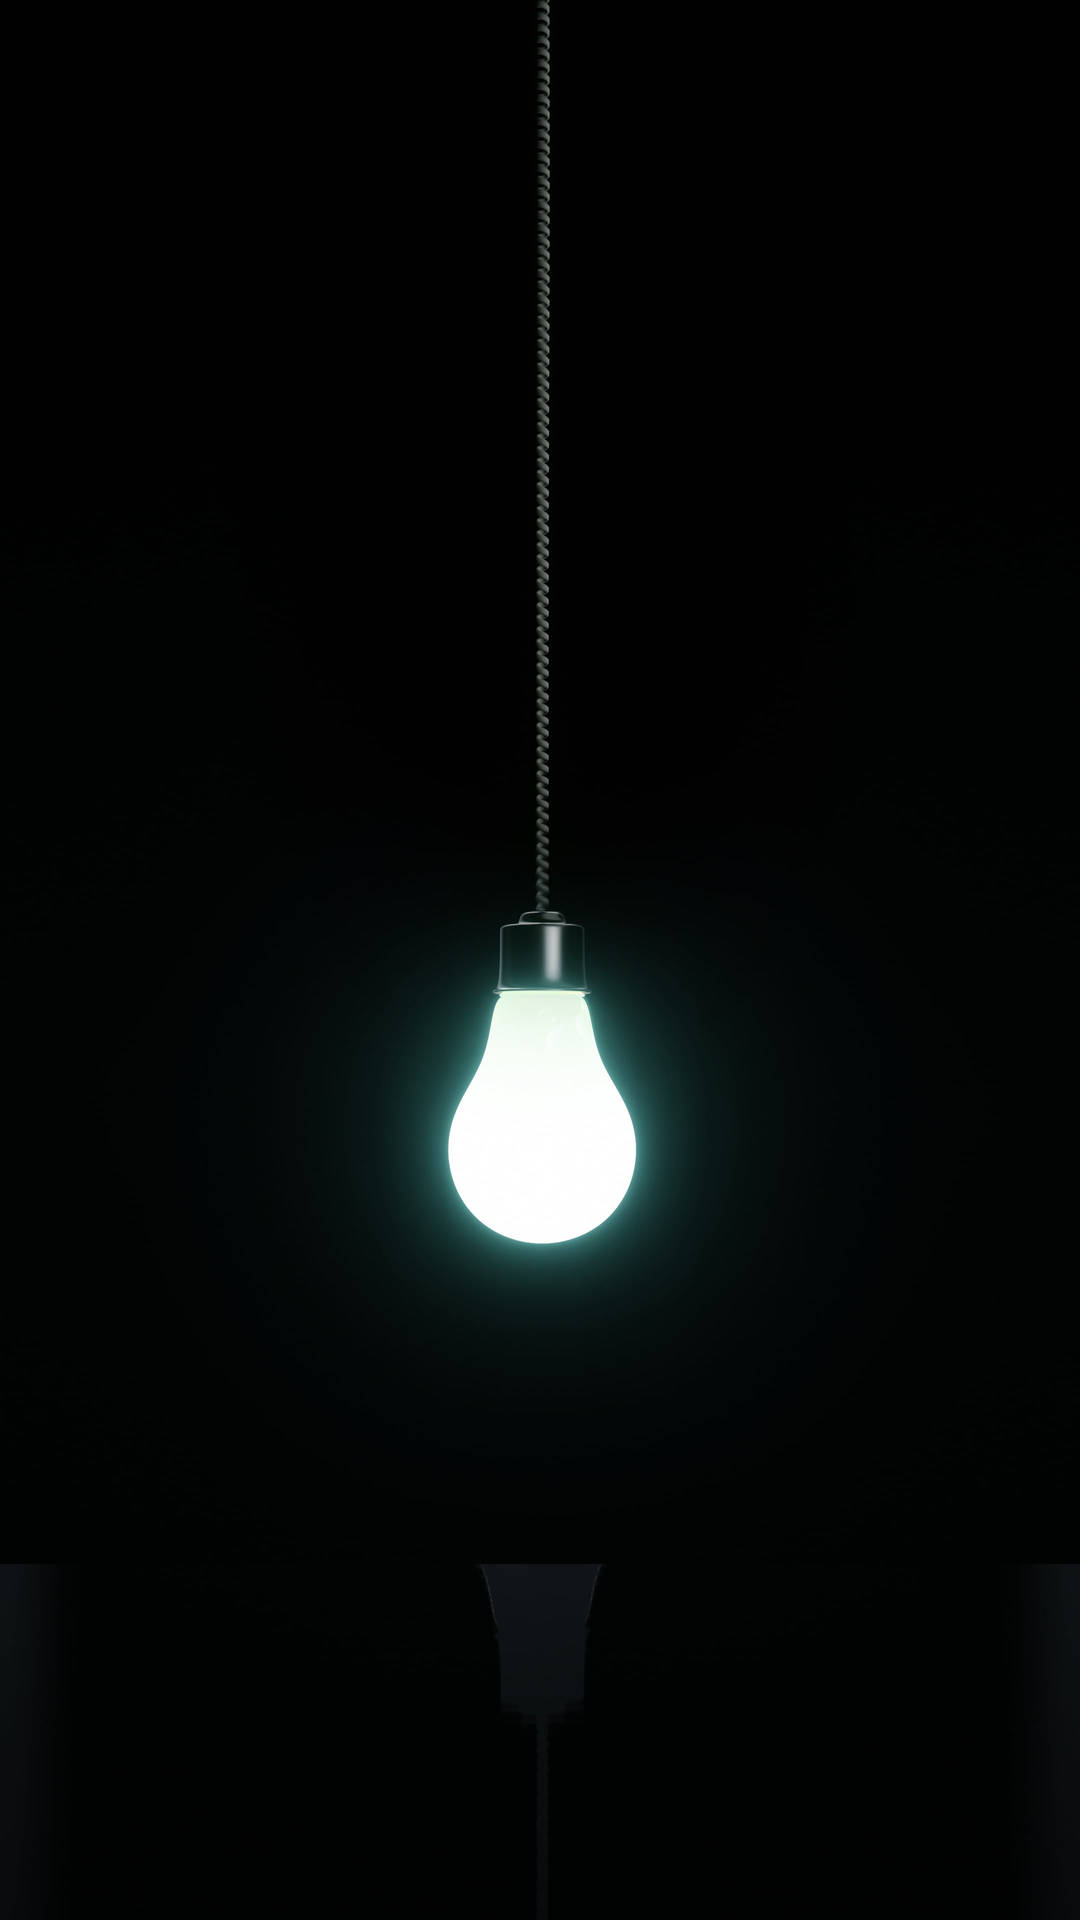 Stunning Oled Hanging Light Bulb In Dim Environment Wallpaper